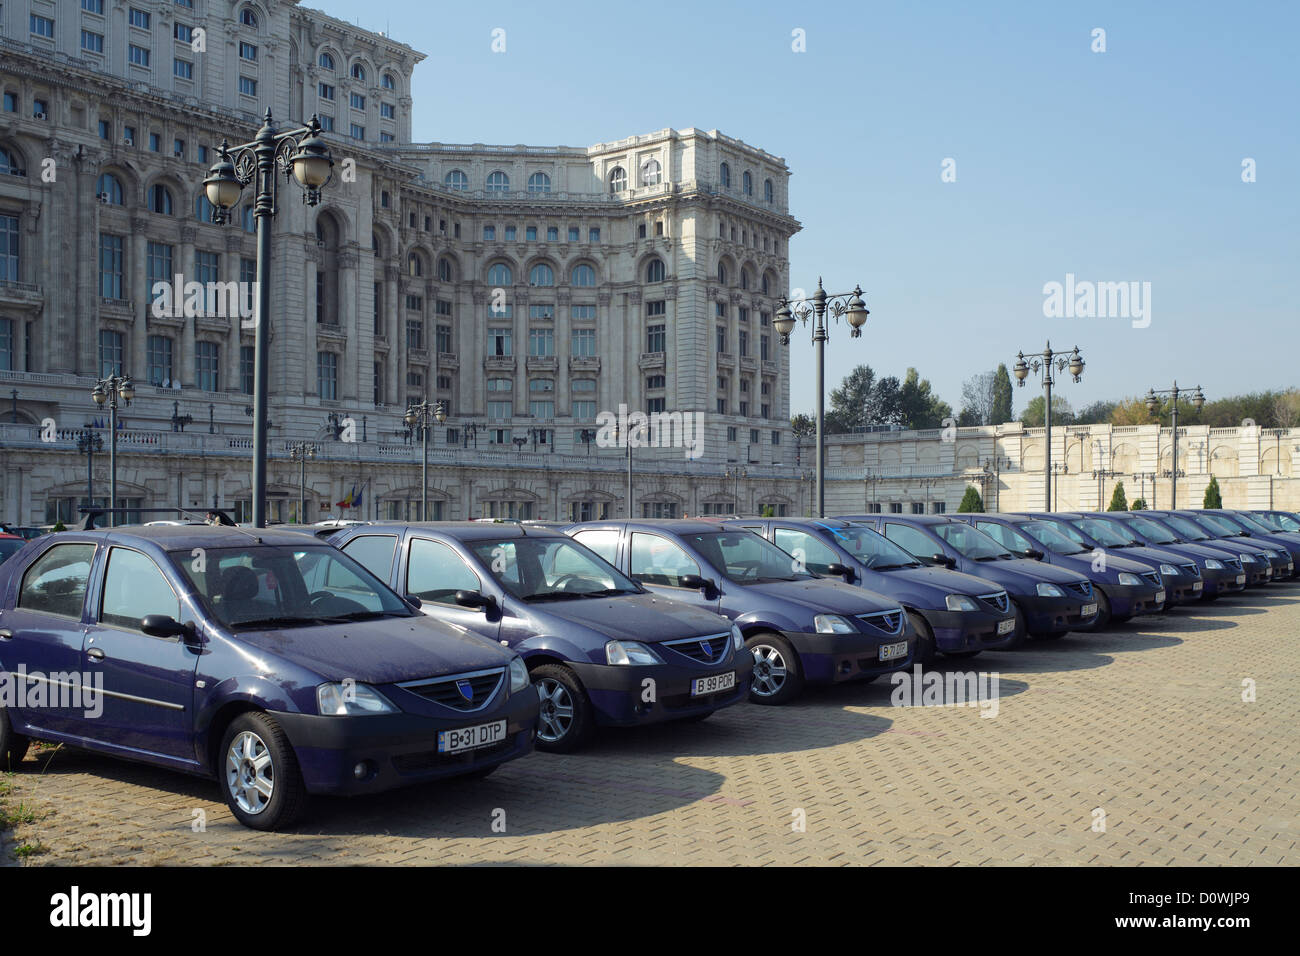 Bukarest, Rumänien, die Dacia Marke Autos geparkt vor dem Palast des Parlaments Stockfoto